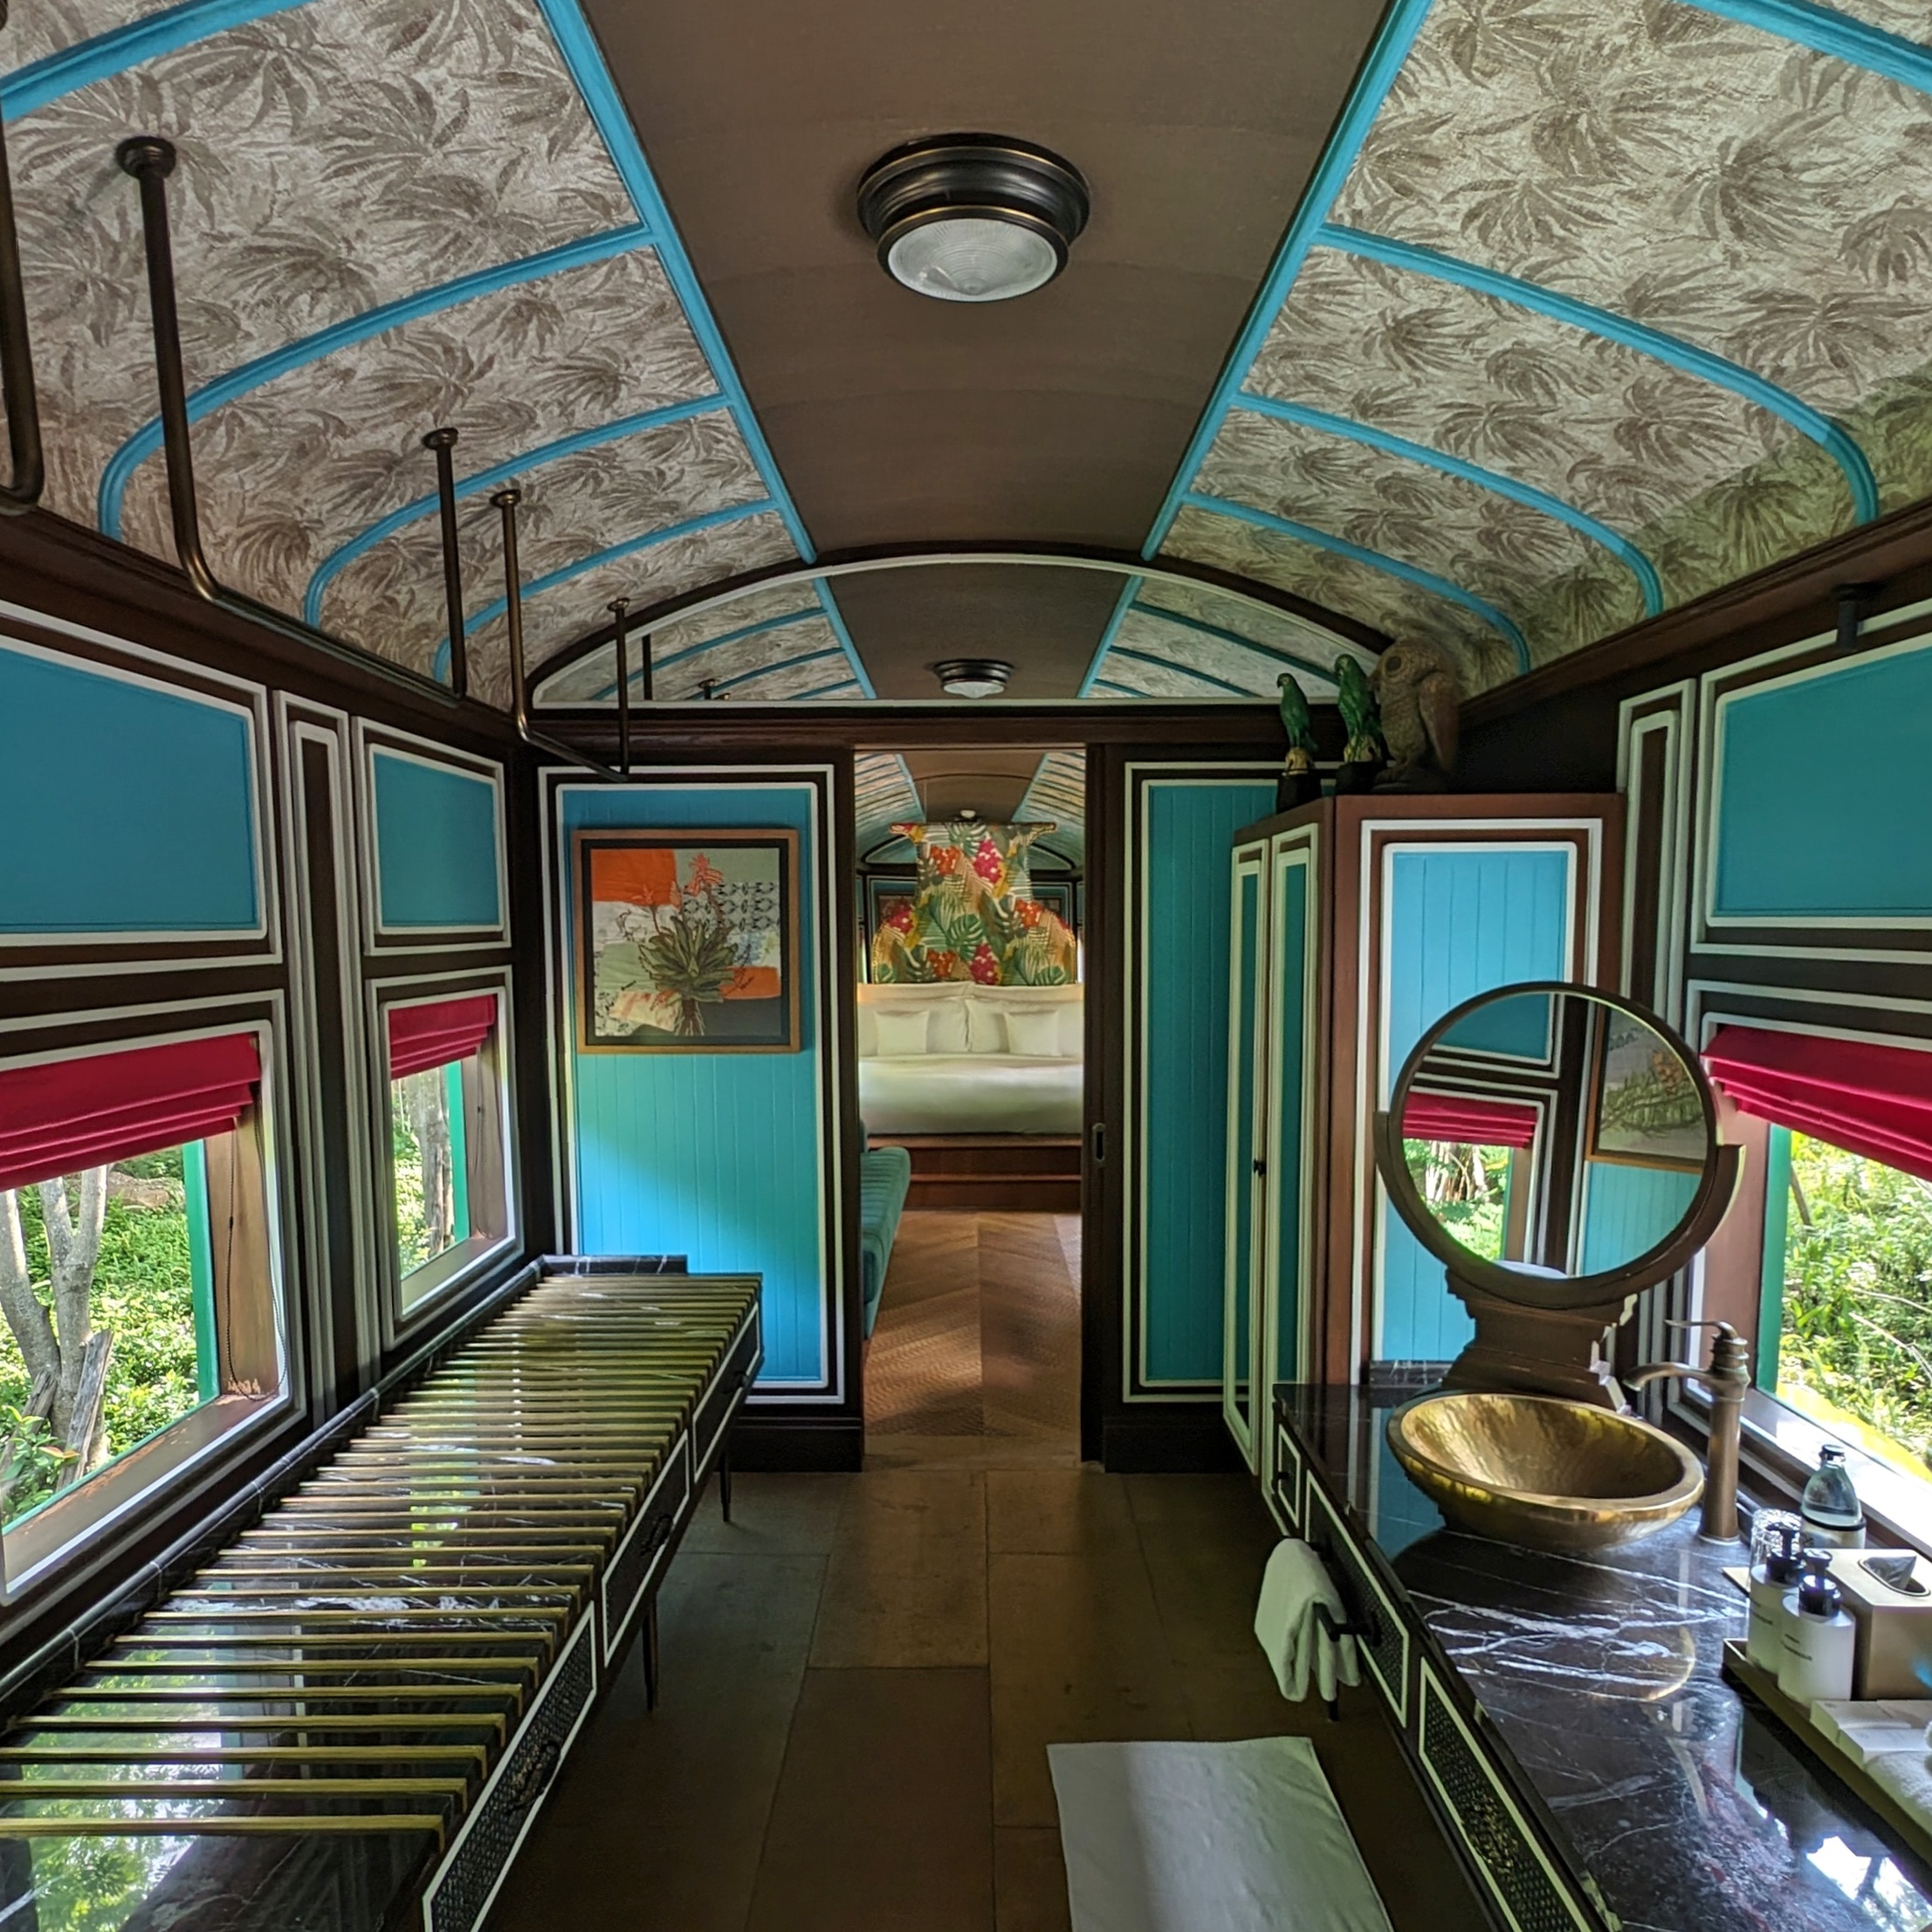 InterContinental Khao Yai Resort Heritage Railcar 1 Bedroom Villa Dressing Area